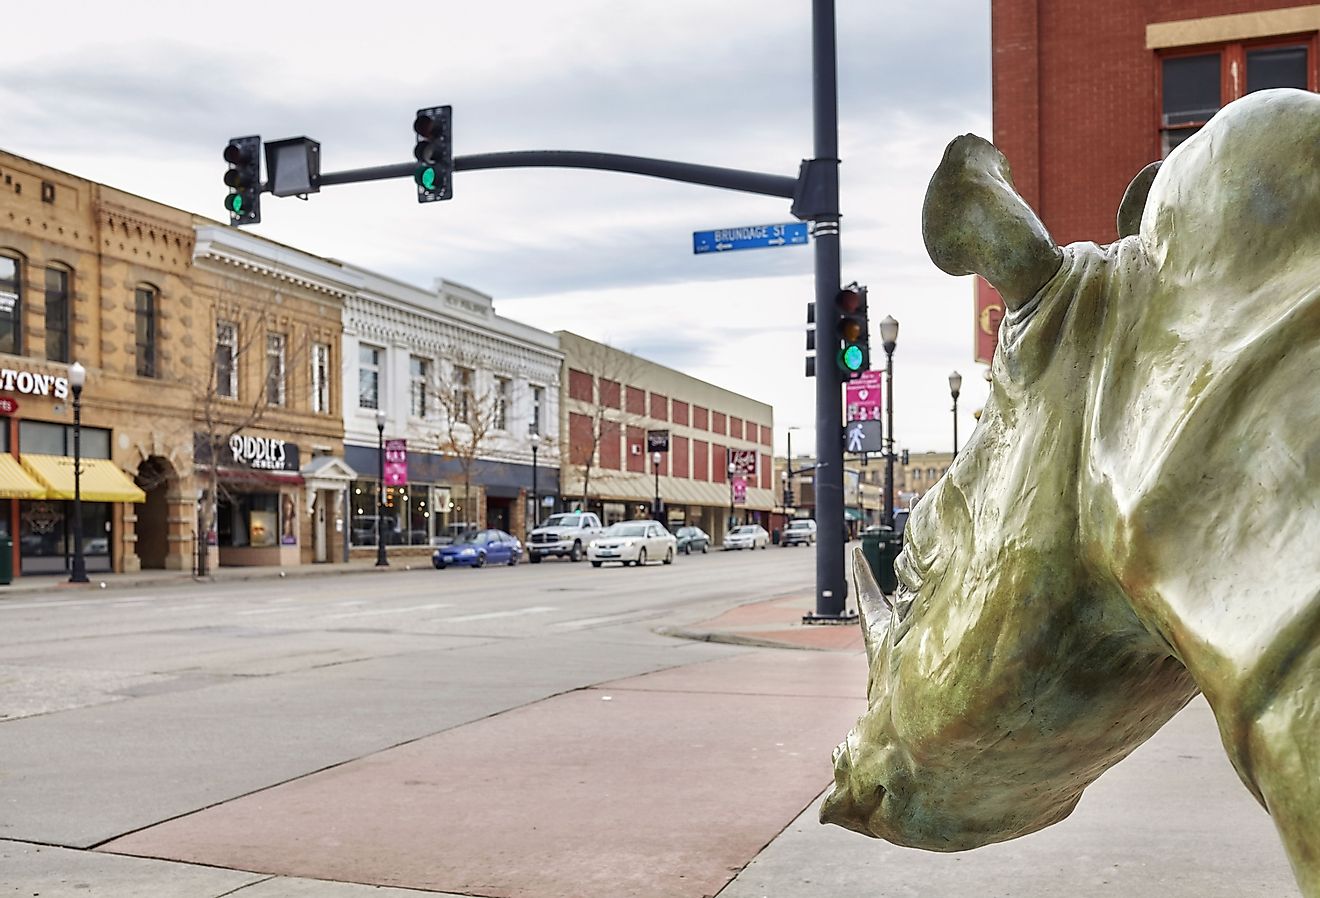 Bronze rhino on a pavement, Sheridan, Wyoming. Image credit Maciej Bledowski via Shutterstock